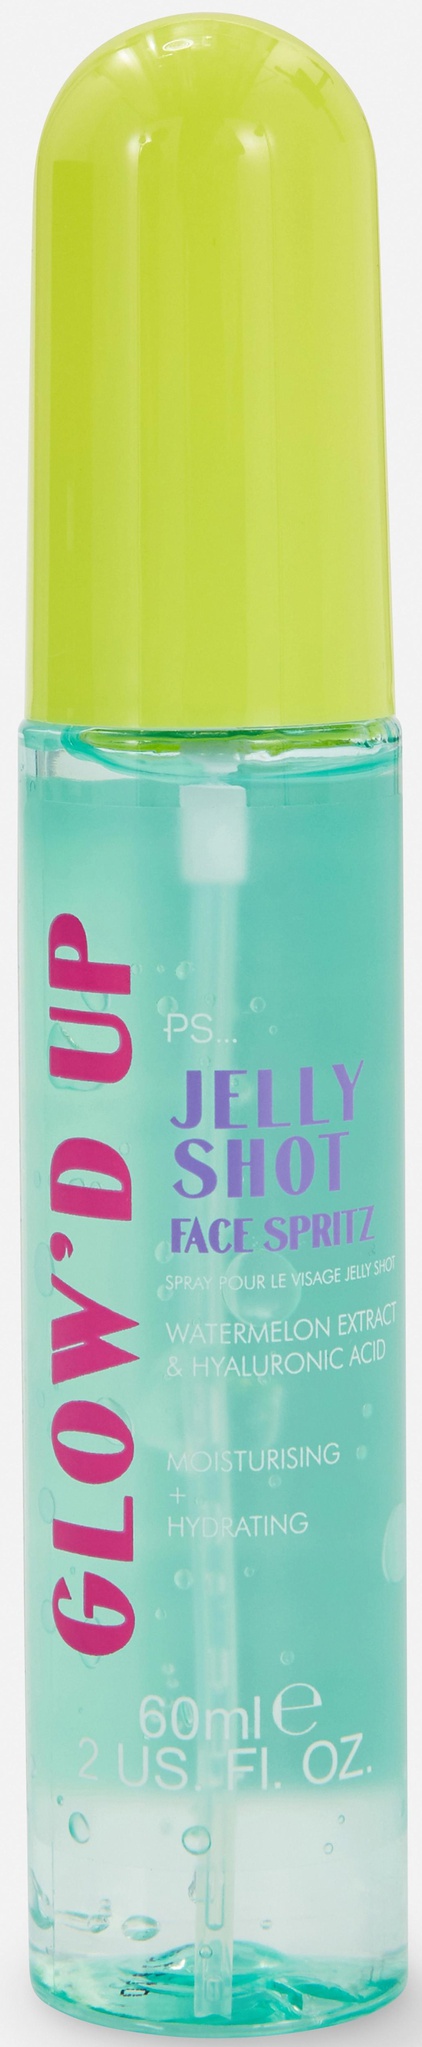 Primark Jelly Shot Face Spritz